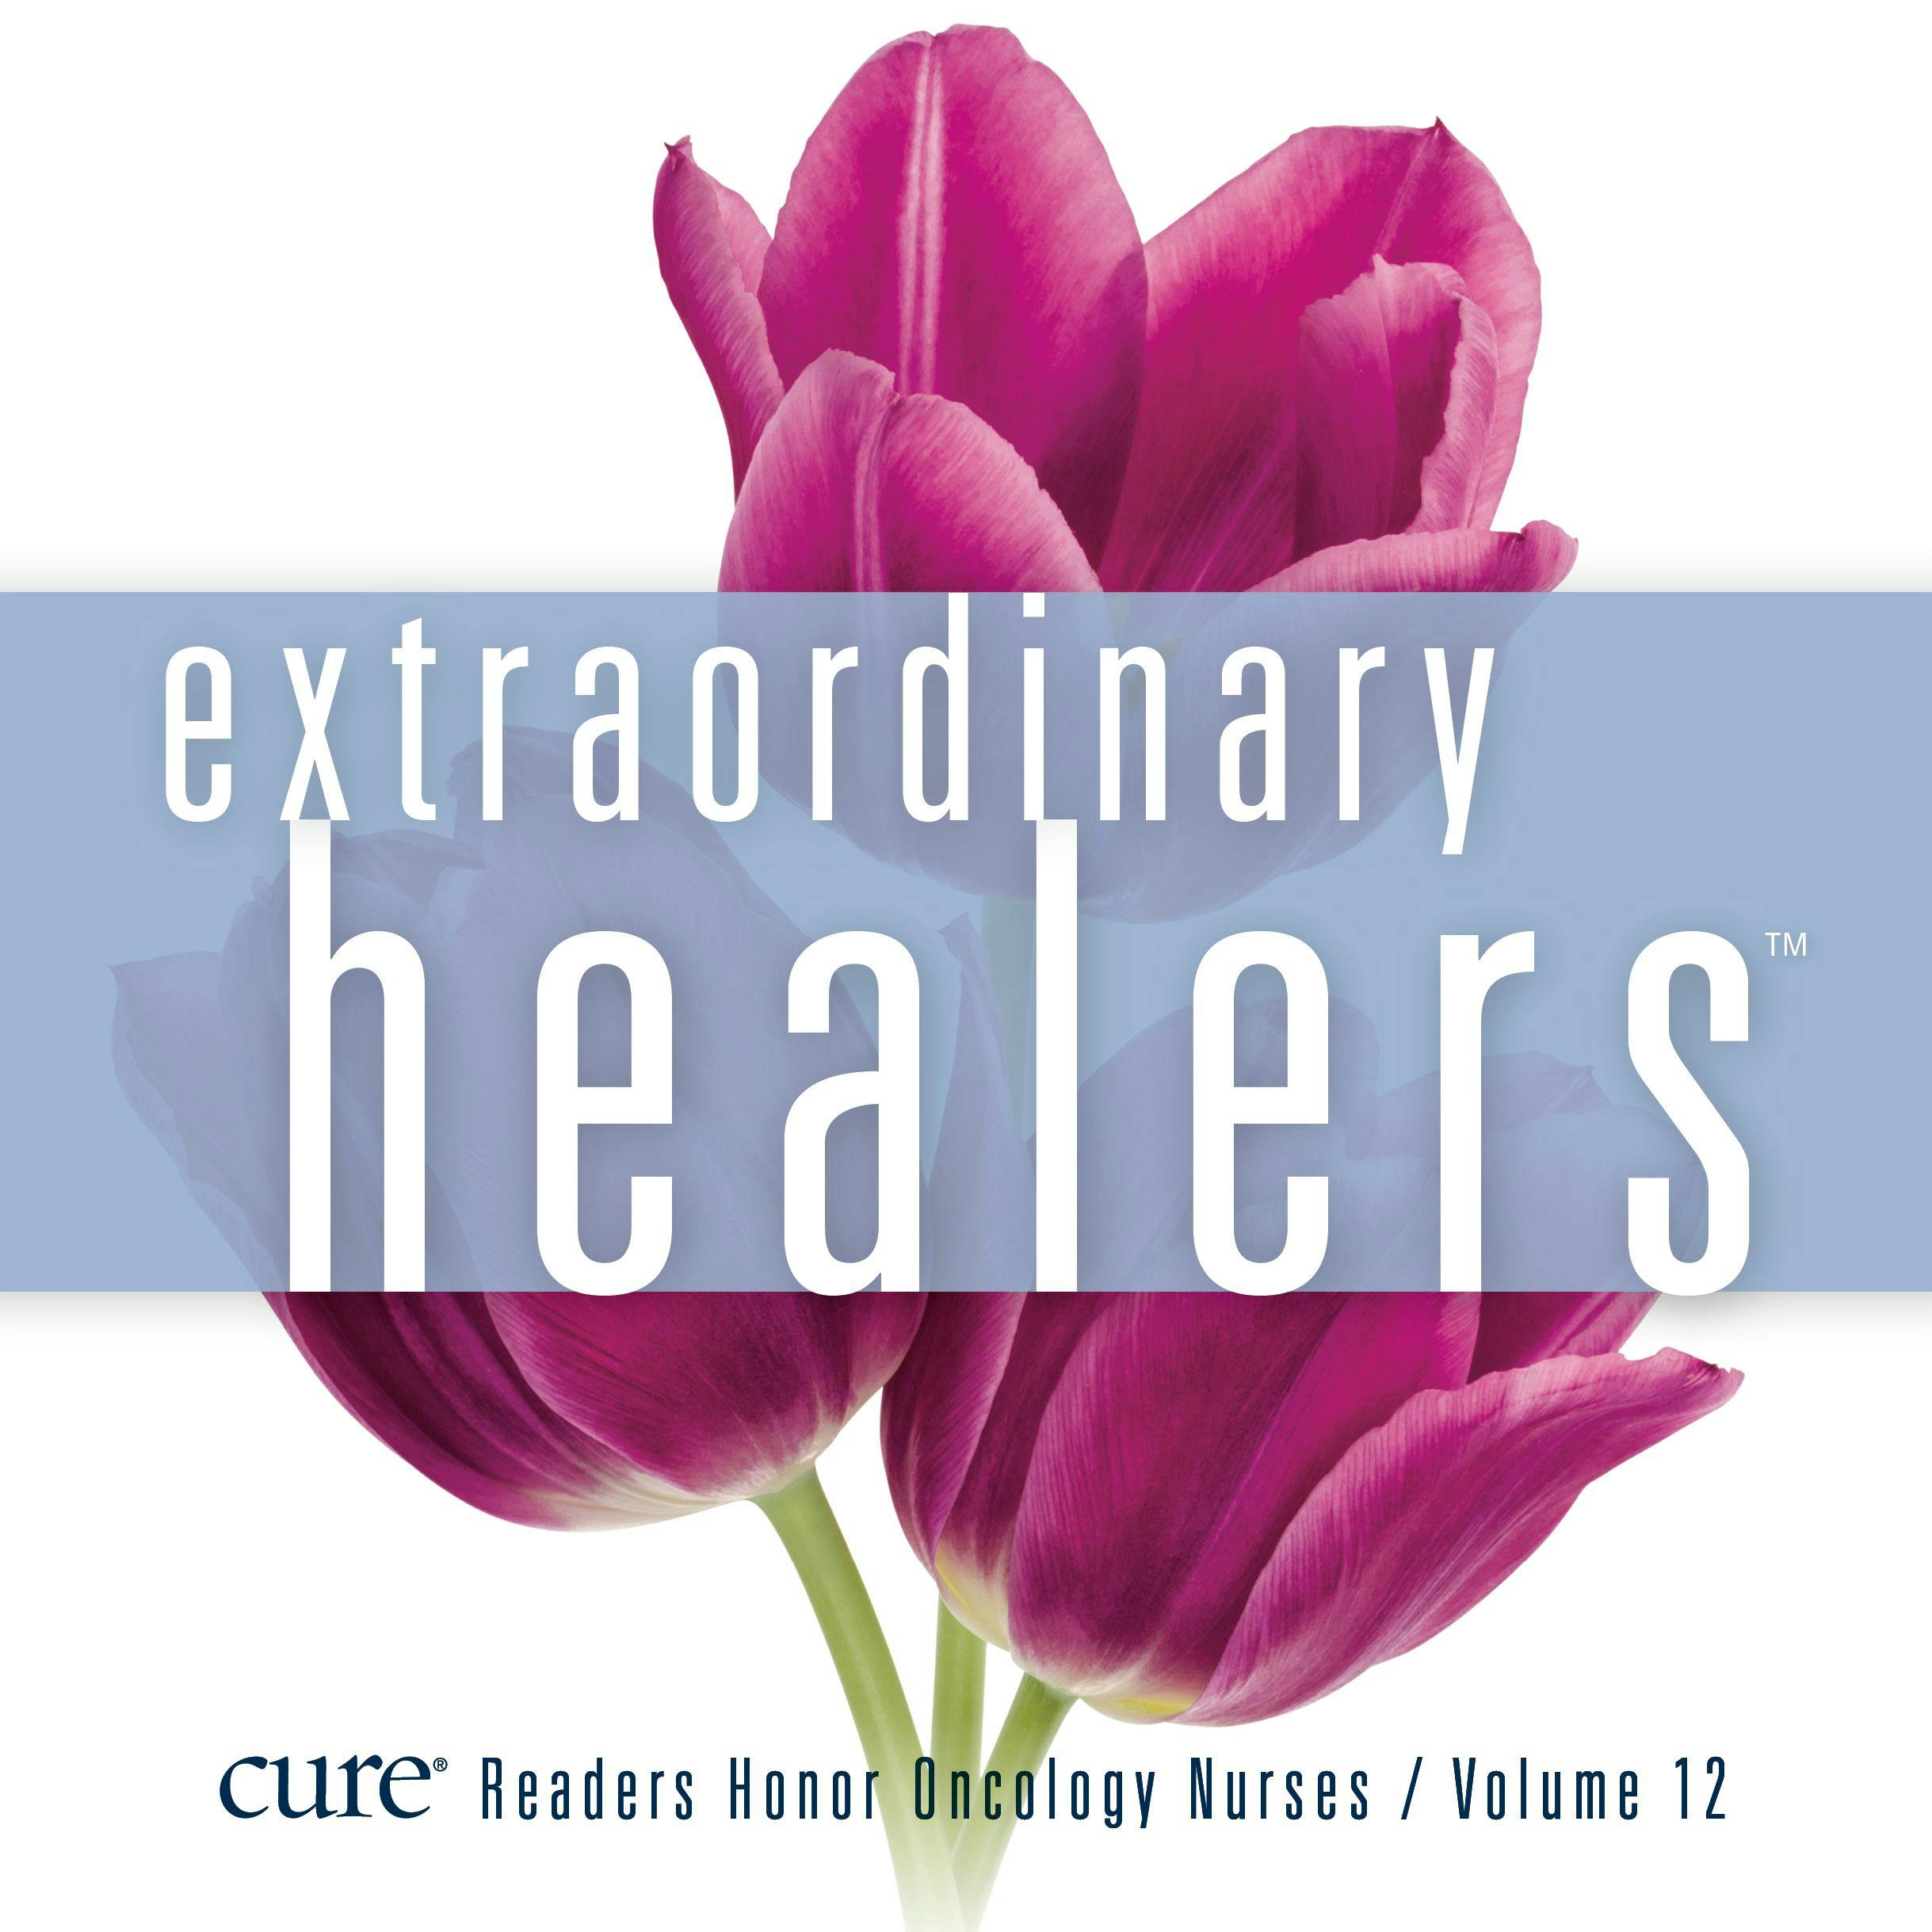 Extraordinary Healers Vol. 12